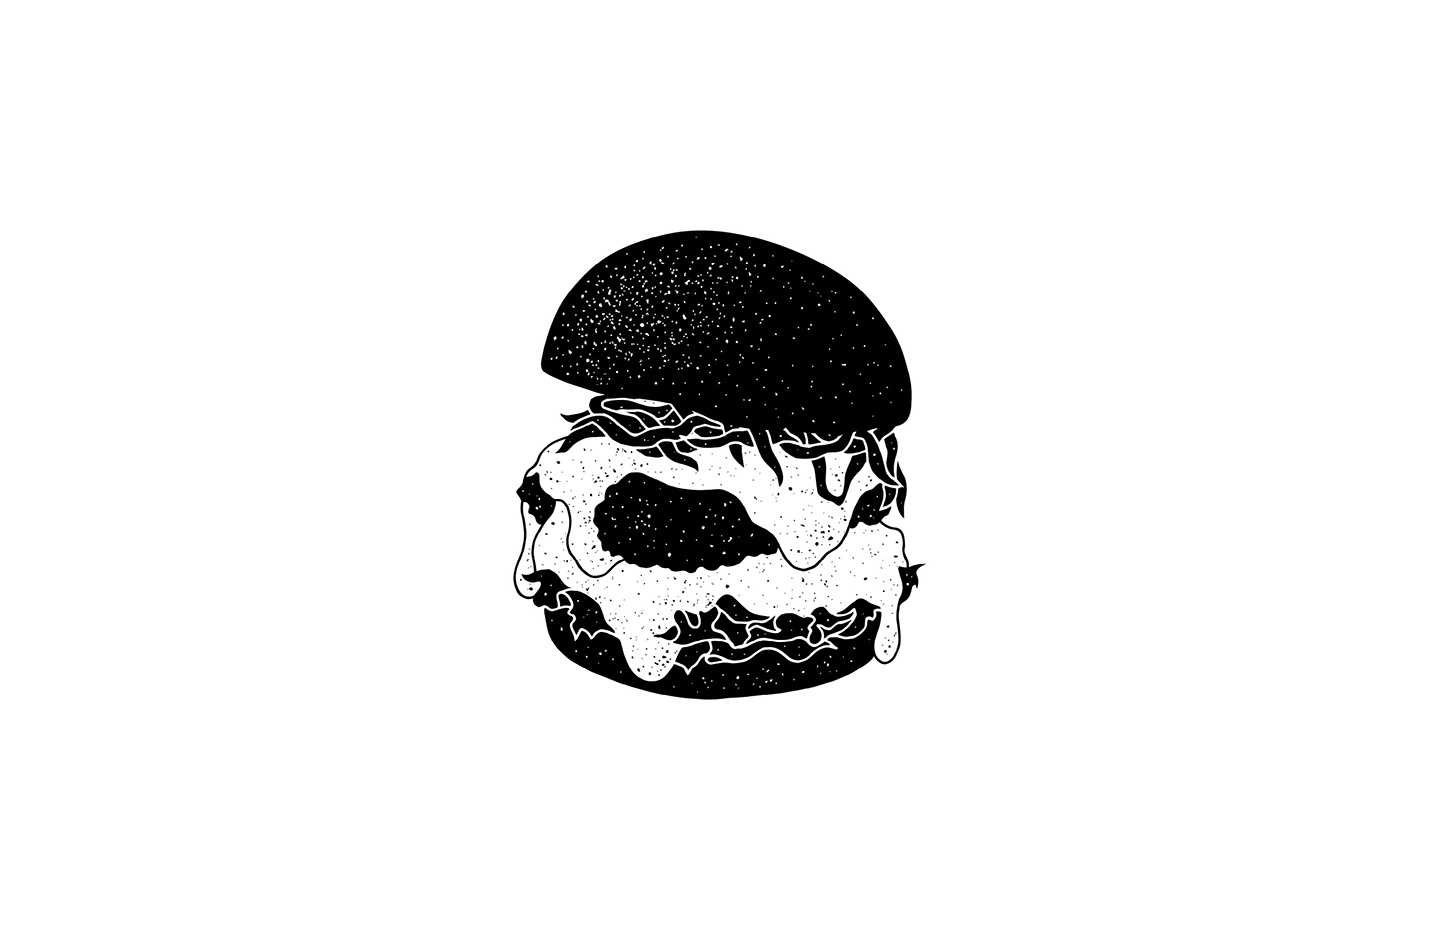 Black_and_white_grunge_burger_illustration_by_Designbite_1